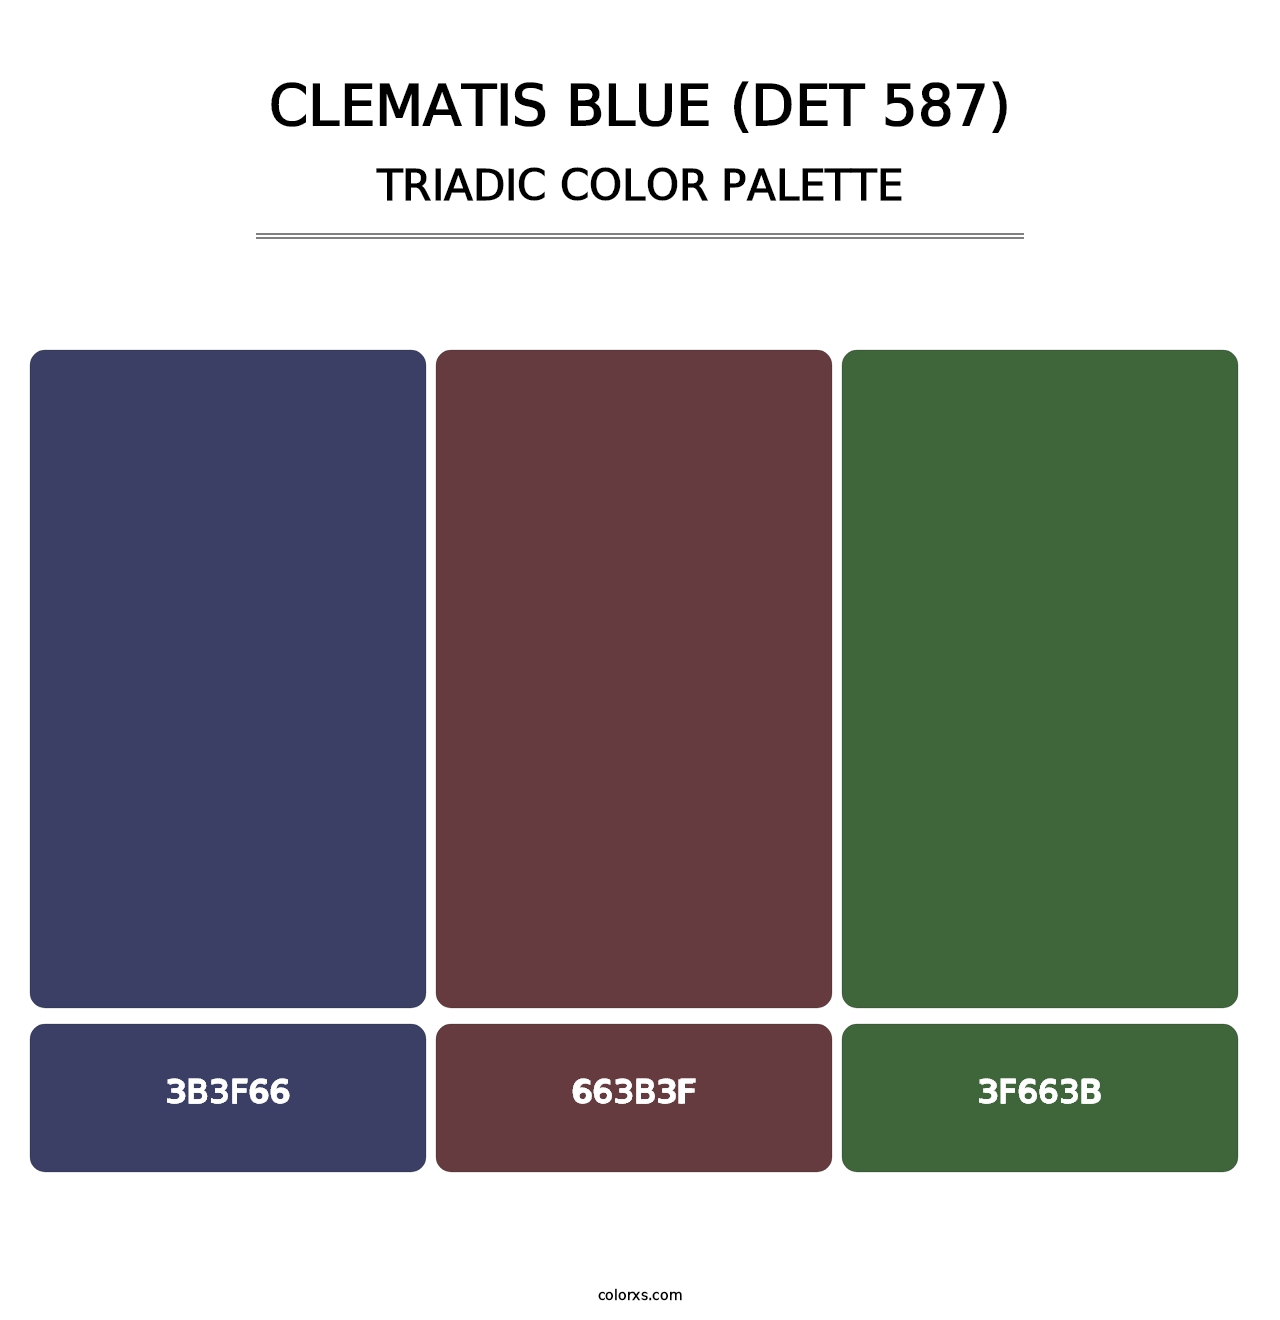 Clematis Blue (DET 587) - Triadic Color Palette